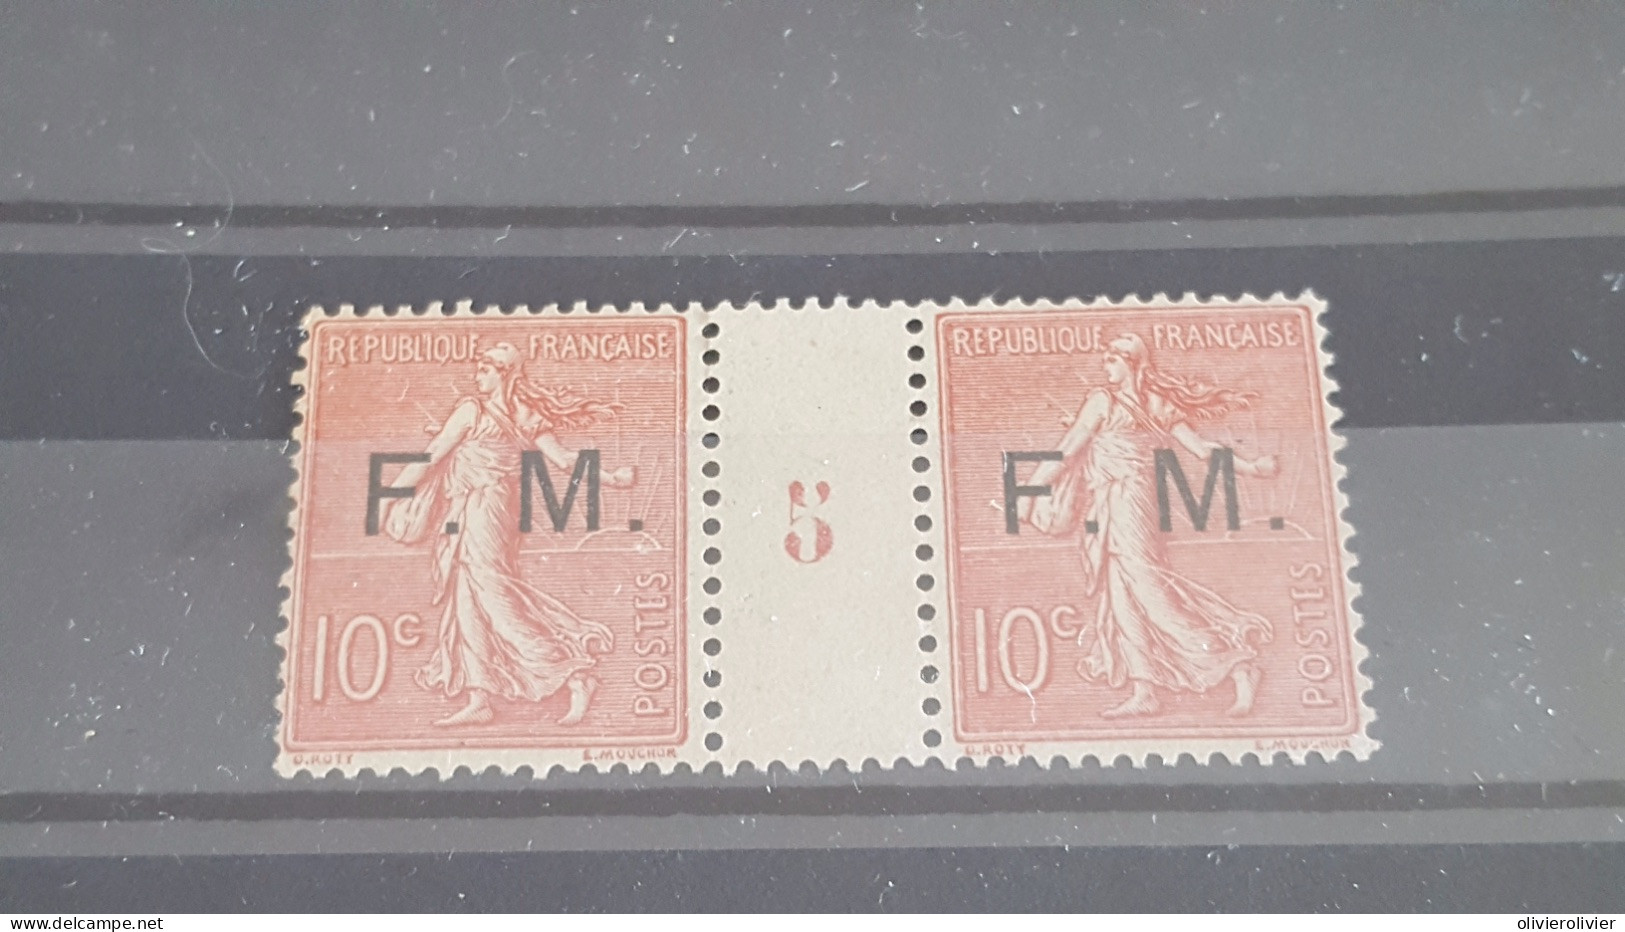 REF A1421 FRANCE NEUF(*) MILLESIMES FM N°5 VALEUR 150 EUROS - Collections